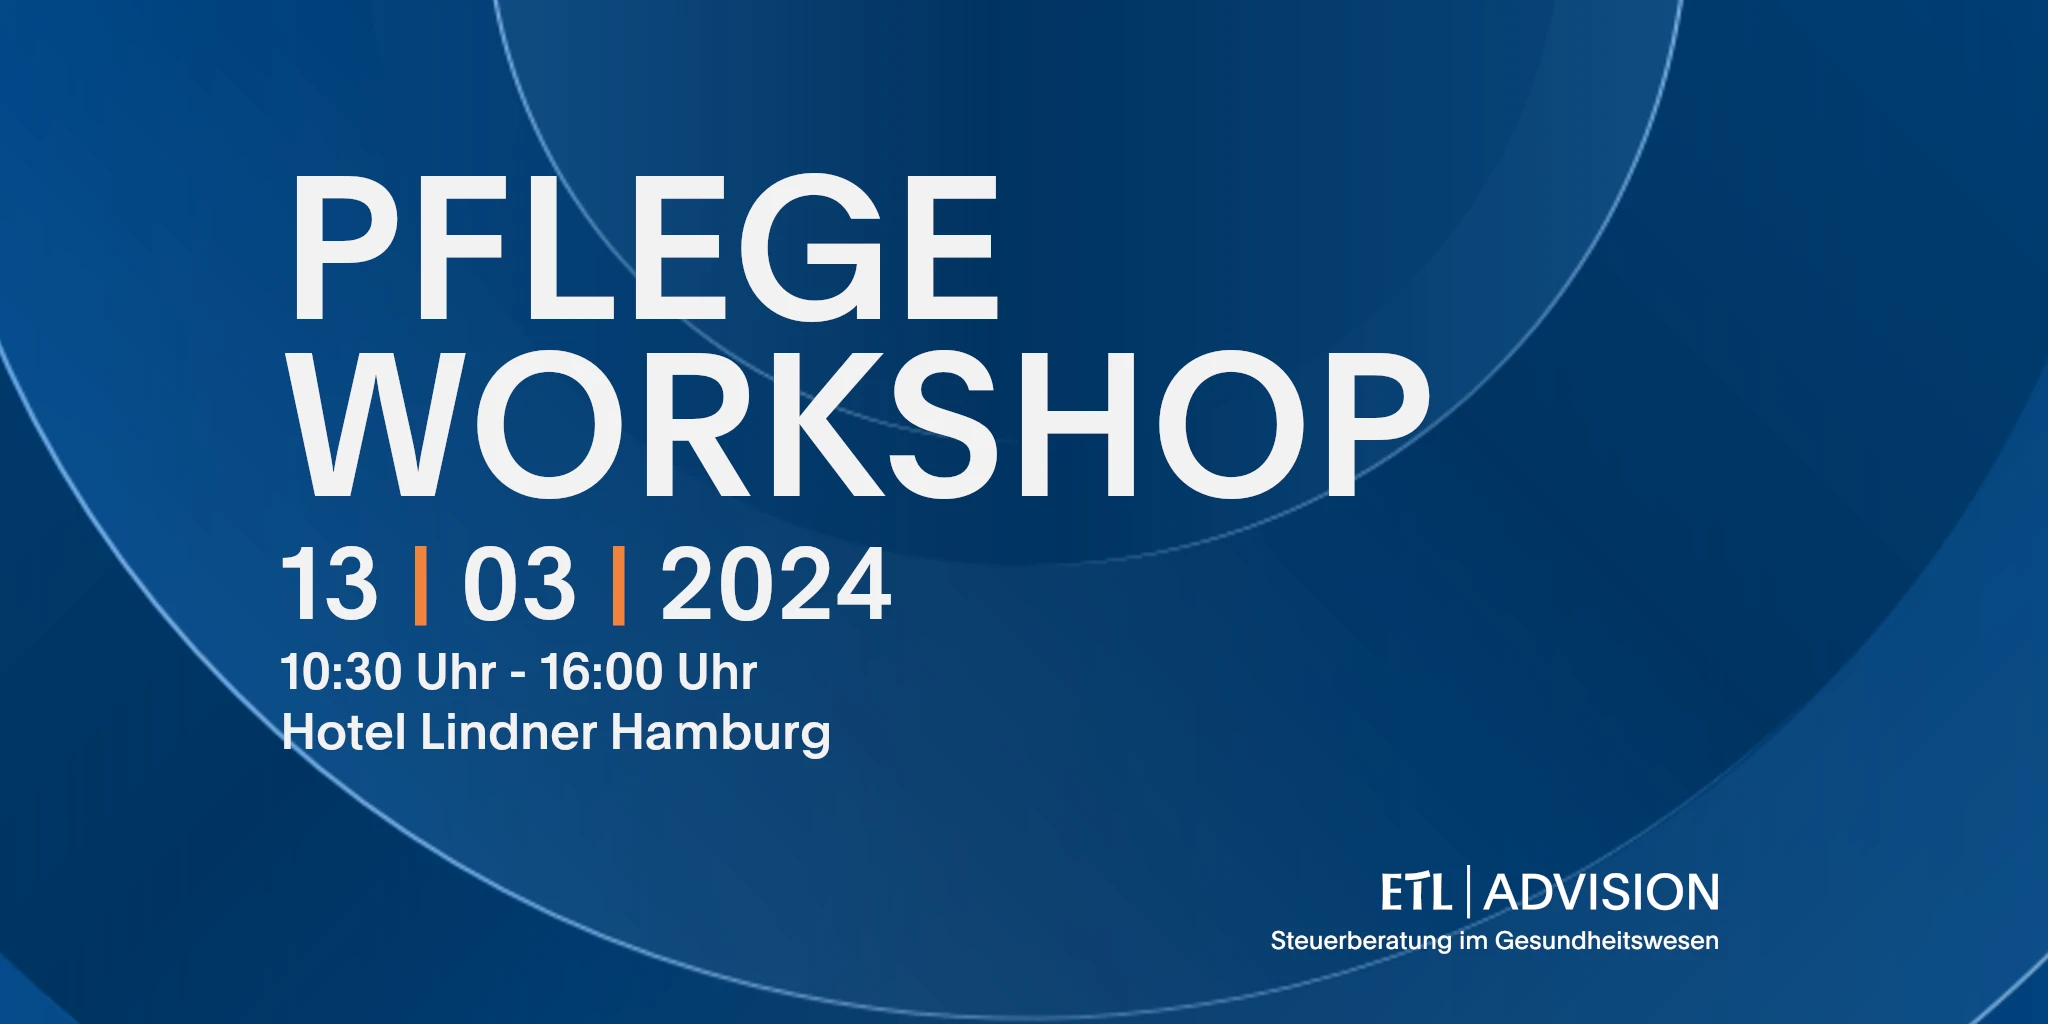 Pflege-Workshop bei ETL ADVISION Hamburg am 13. März 2024